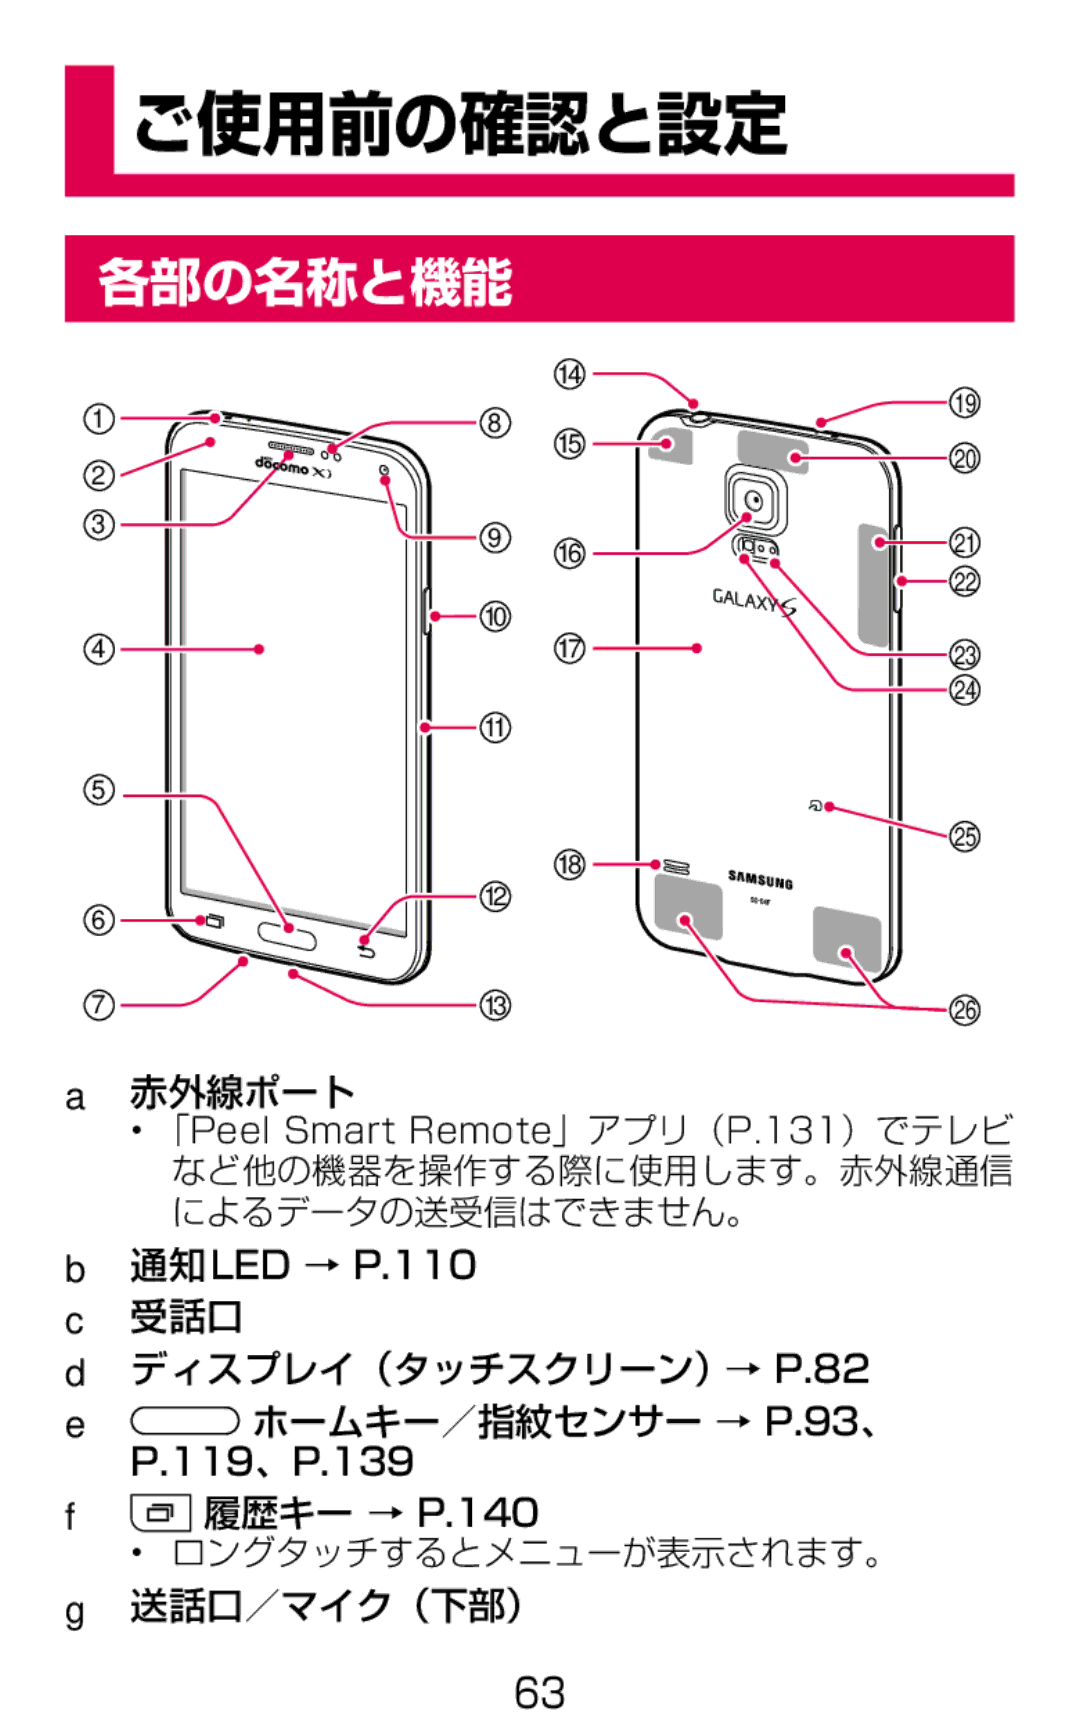 Samsung SM-G900DZKEDCM, SM-G900DZWEDCM manual 各部の名称と機能, 赤外線ポート, 受話口 ディスプレイ（タッチスクリーン）→ P.82 ホームキー／指紋センサー → P.93、, 送話口／マイク（下部） 